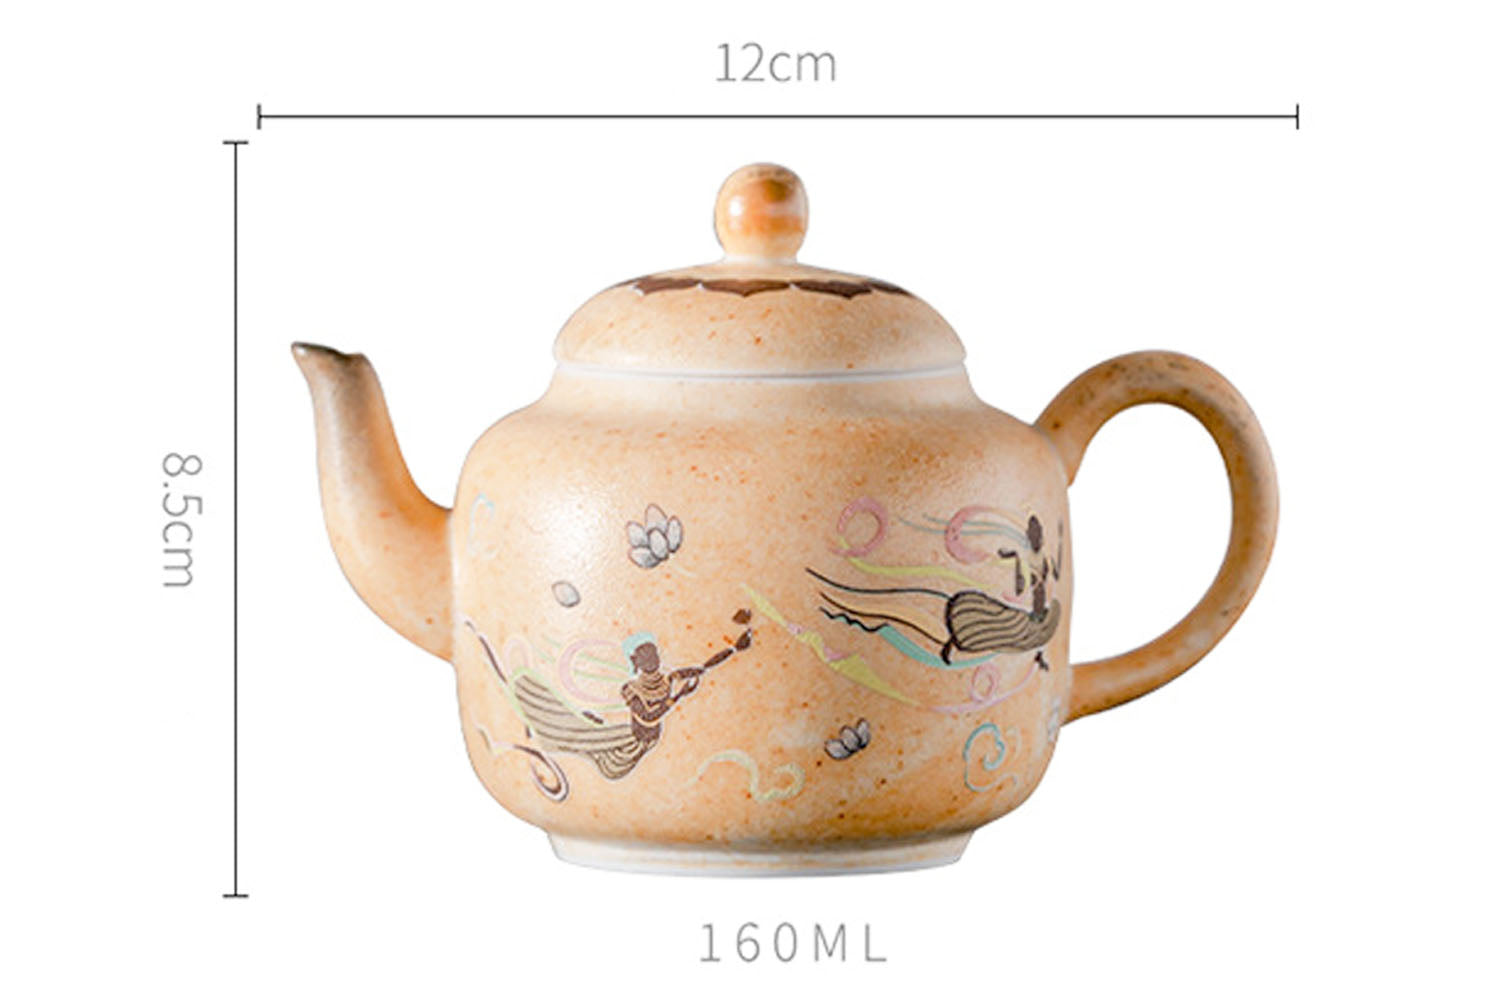 The Flying Apsaras Impression Tea Brewing Set